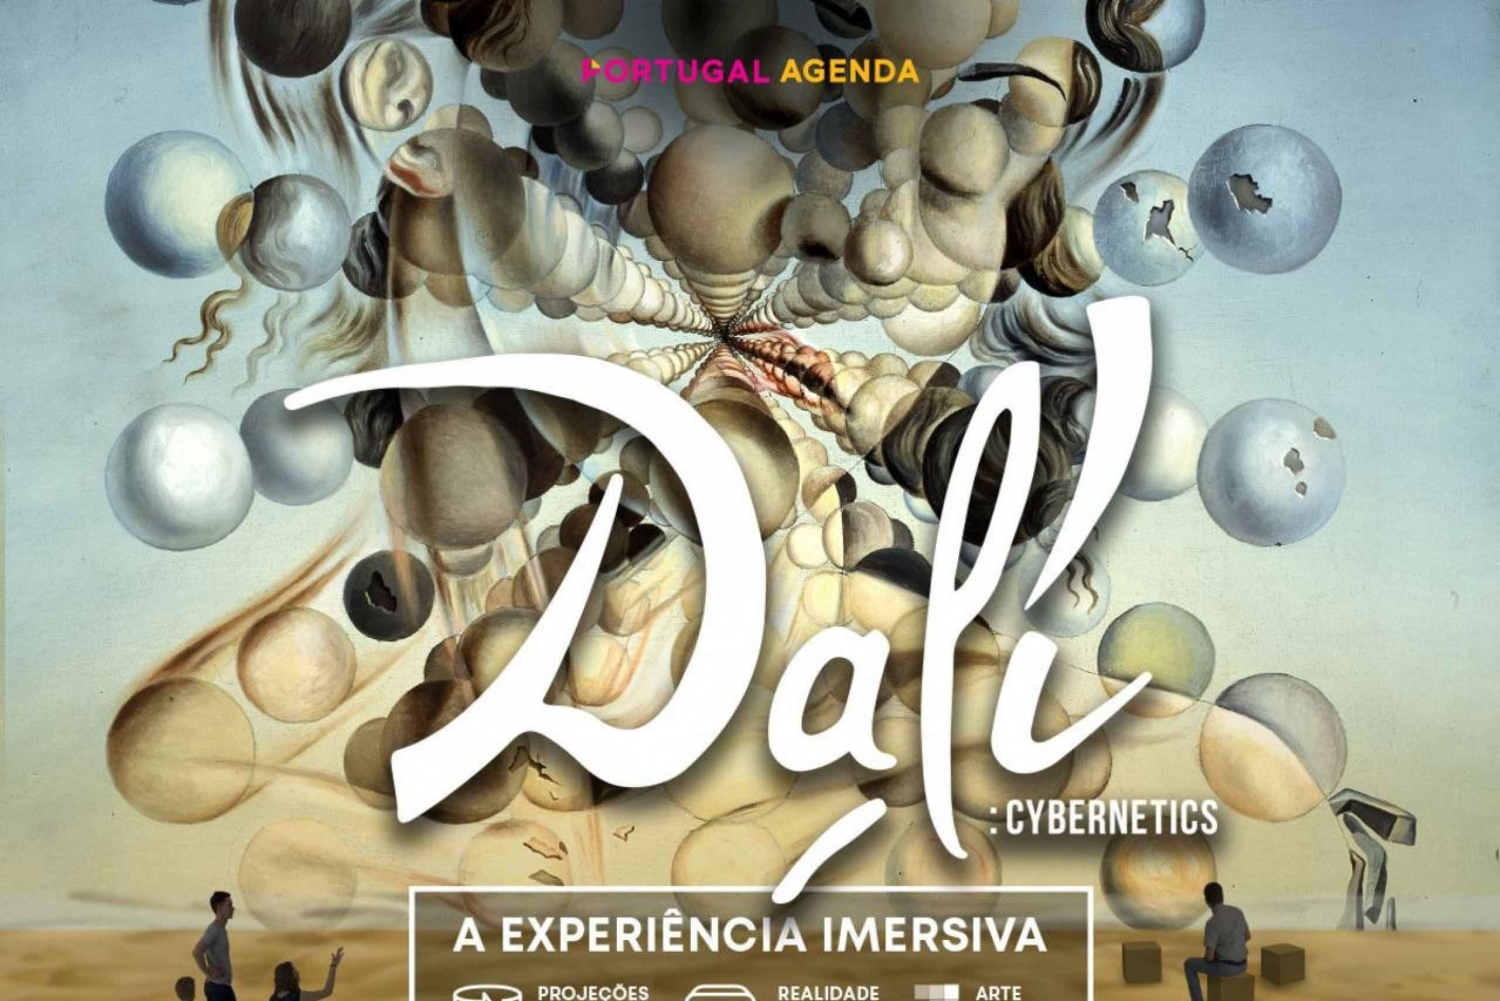 LISBOA: Dalí Cybernetics